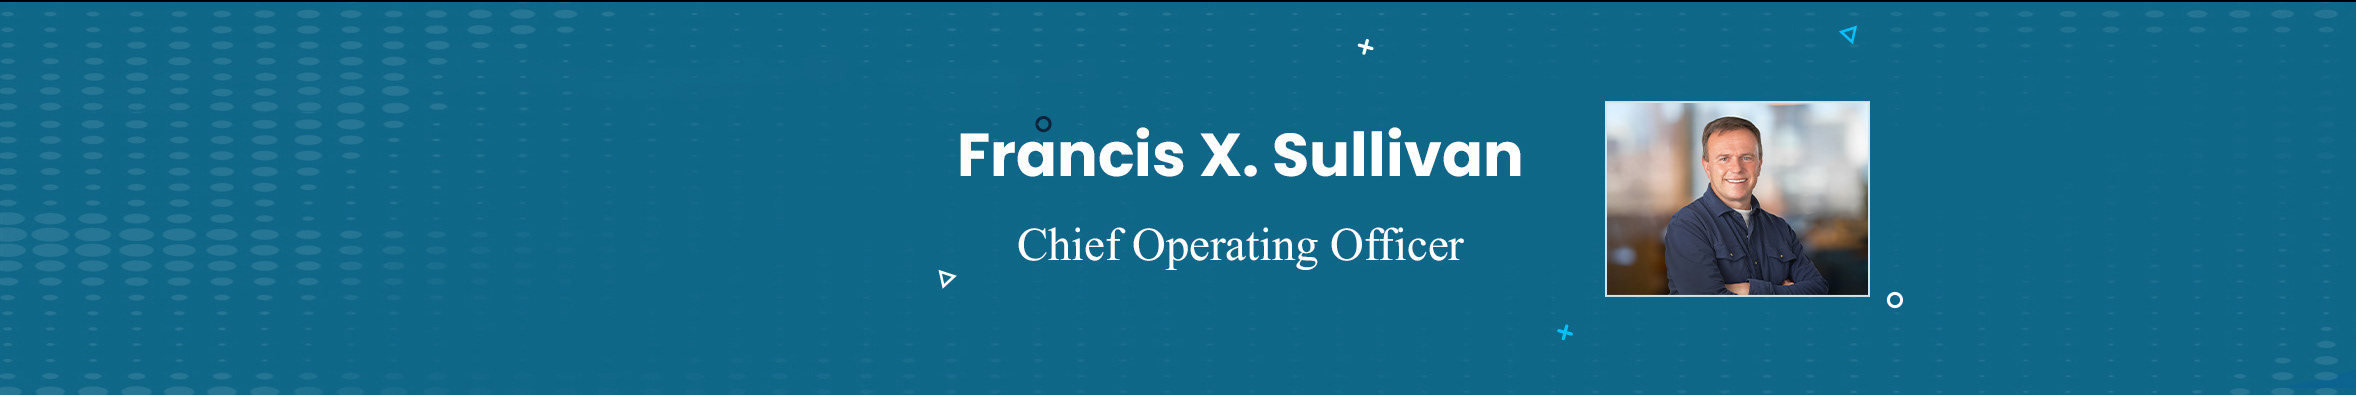 Francis X. Sullivan's profile banner